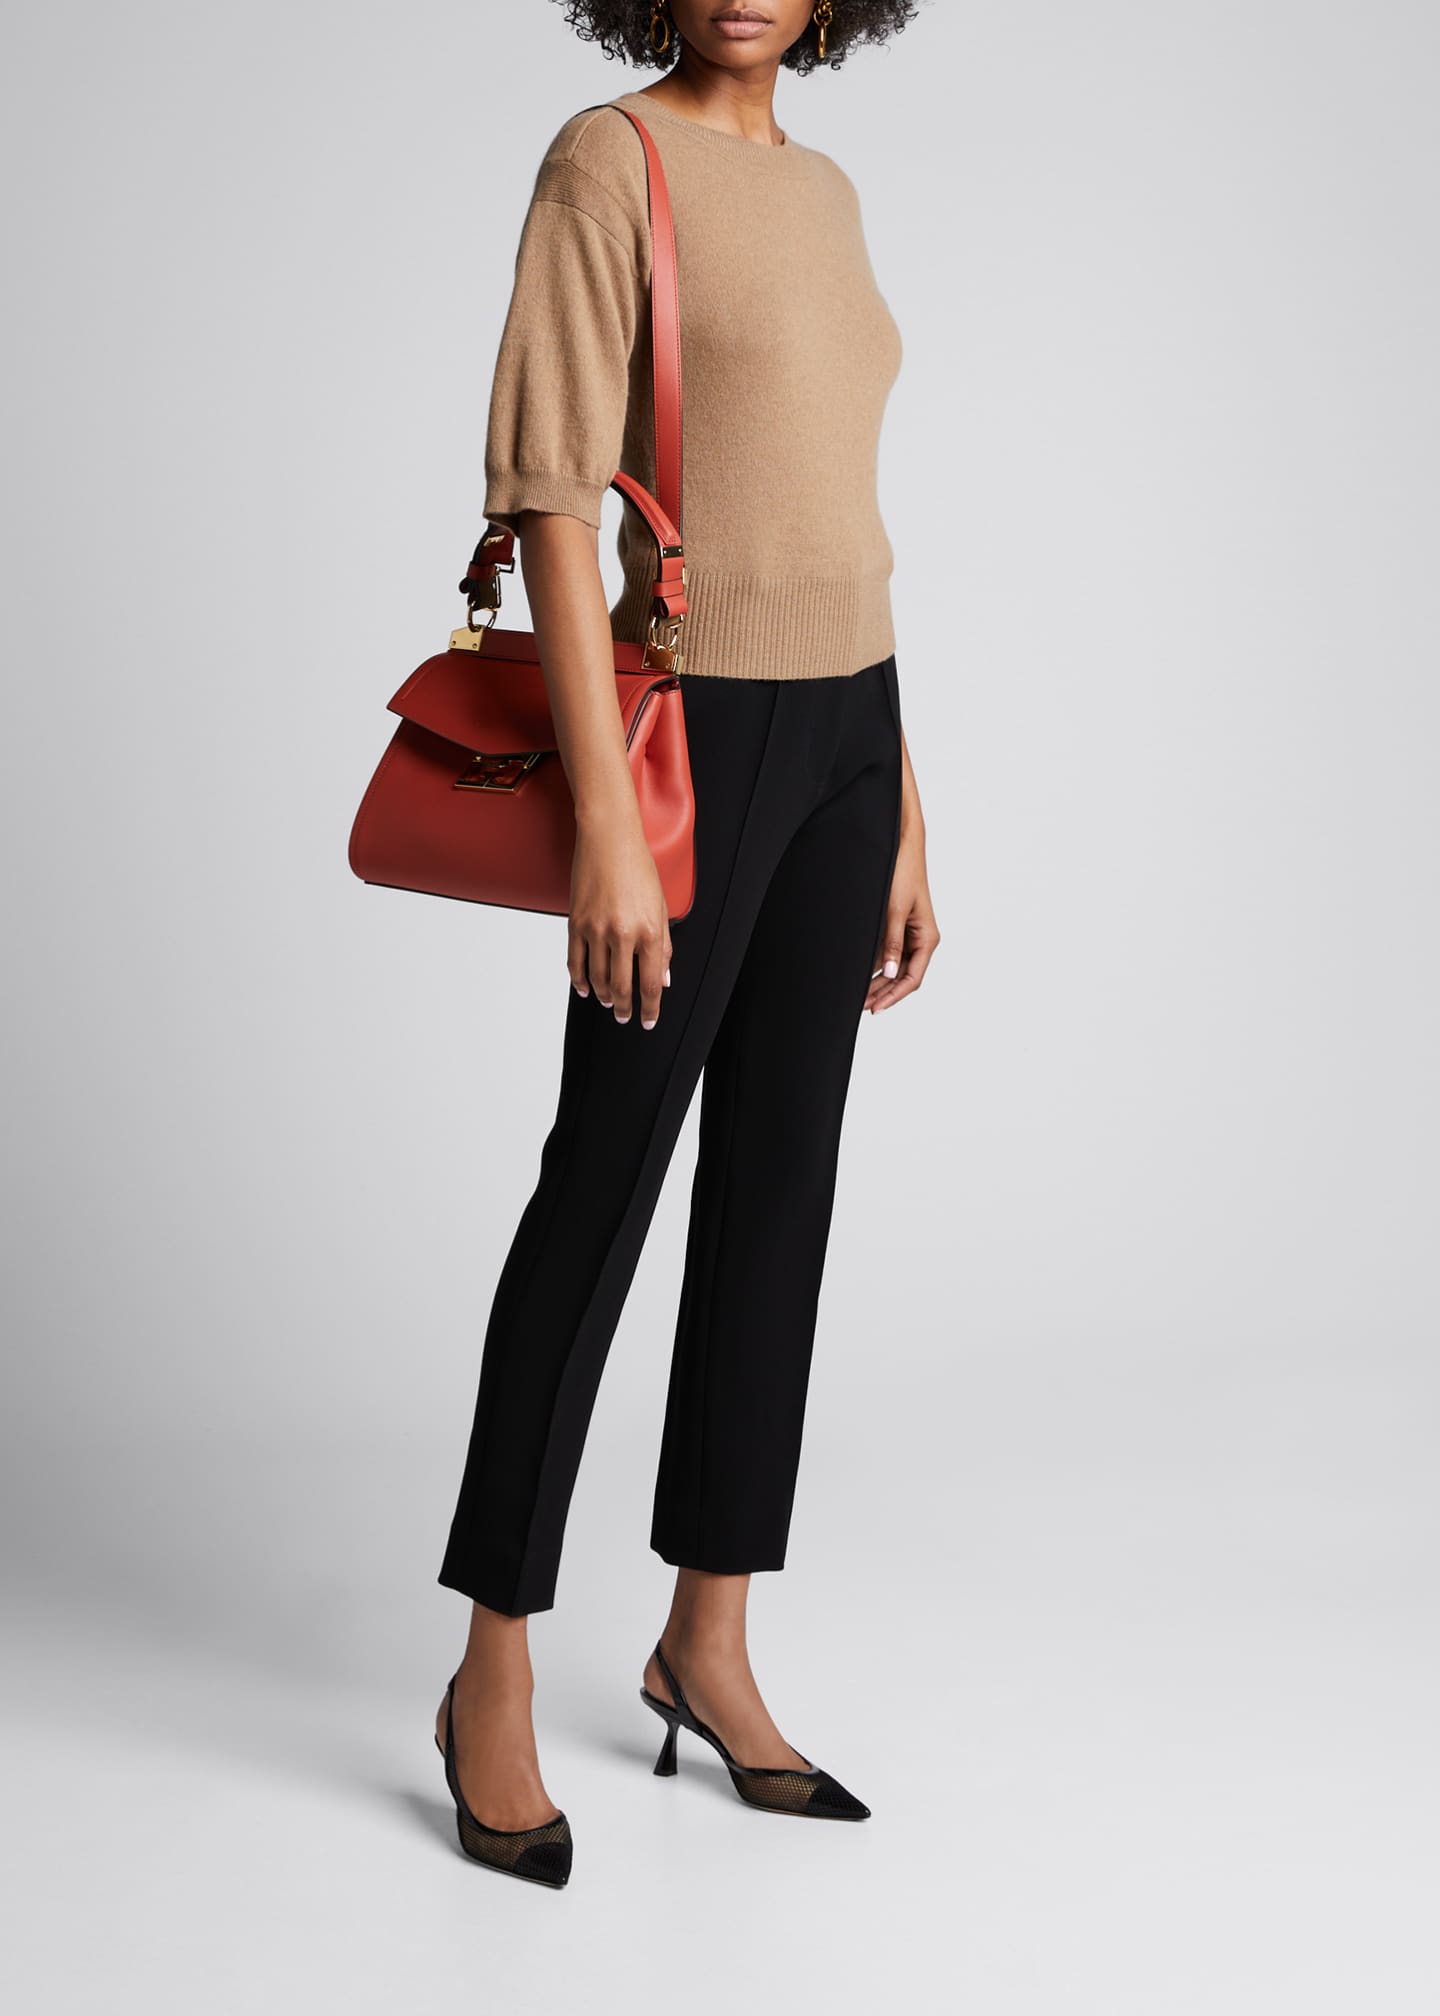 Givenchy Mystic Small Calfskin Top-Handle Bag - Bergdorf Goodman